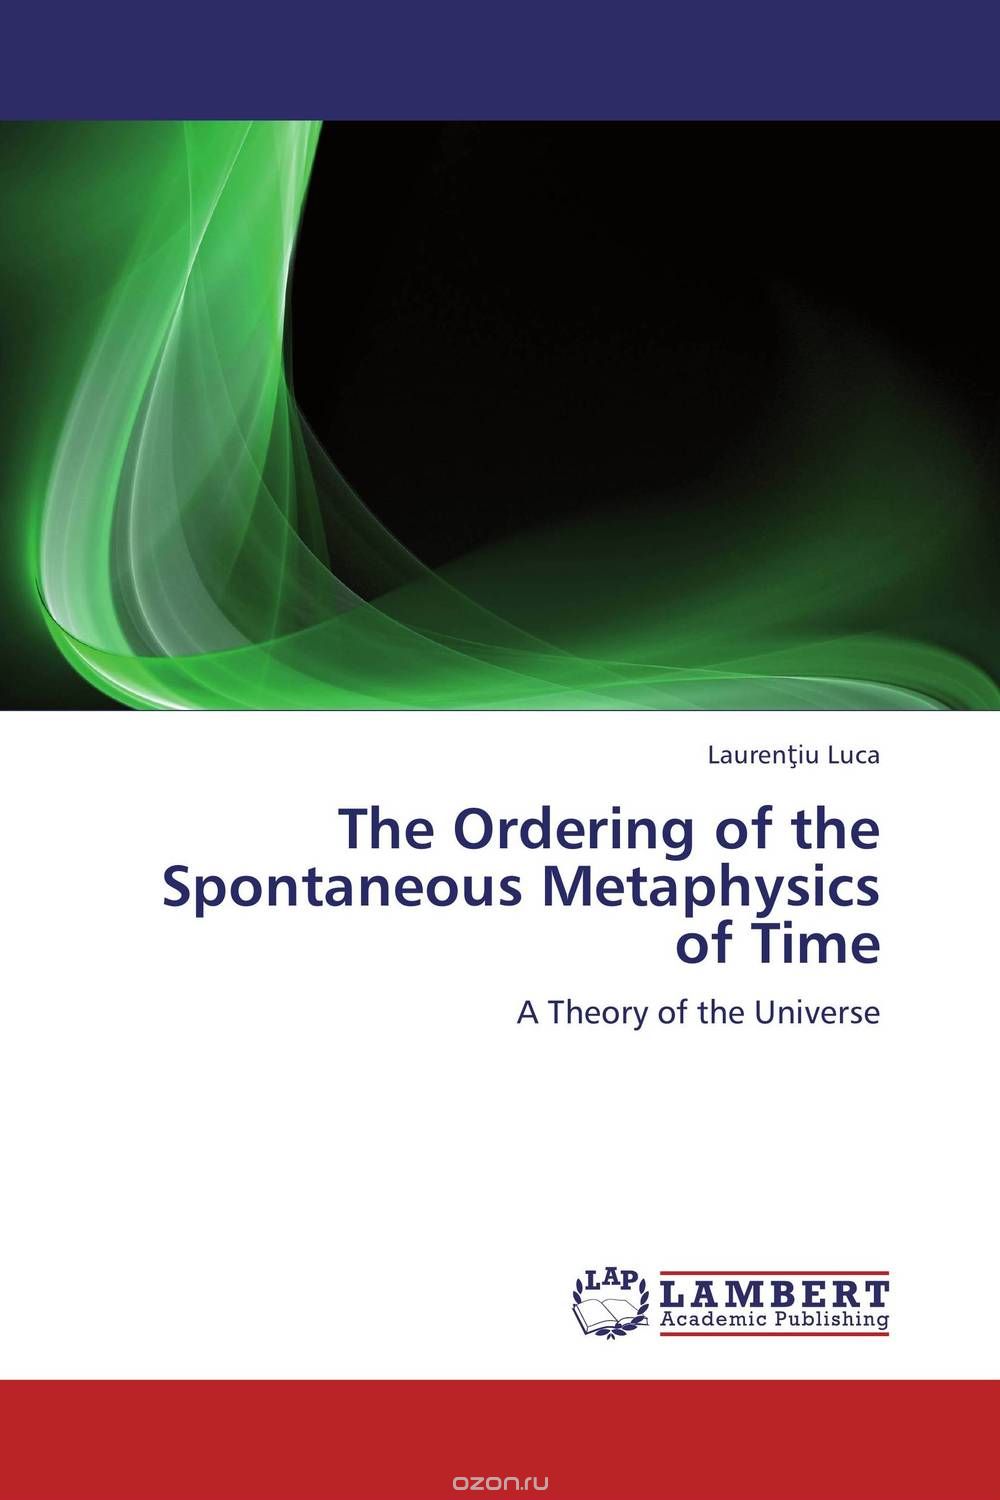 Скачать книгу "The Ordering of the Spontaneous Metaphysics of Time"